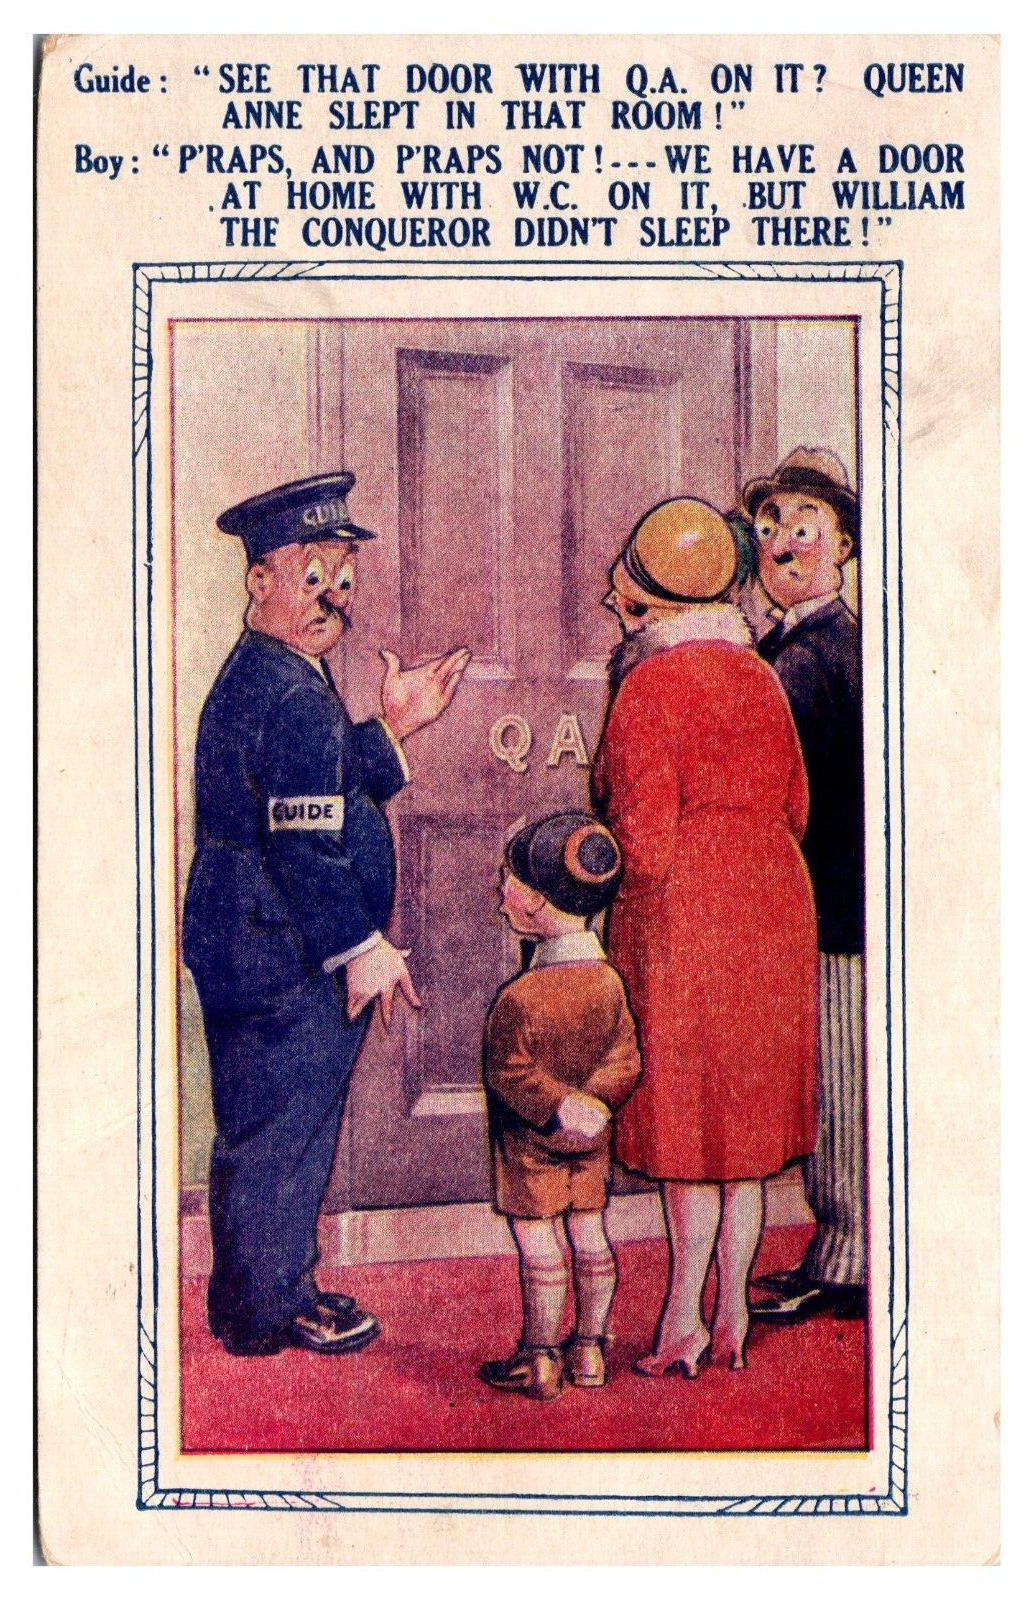 1929 British Bathroom Humor Postcard